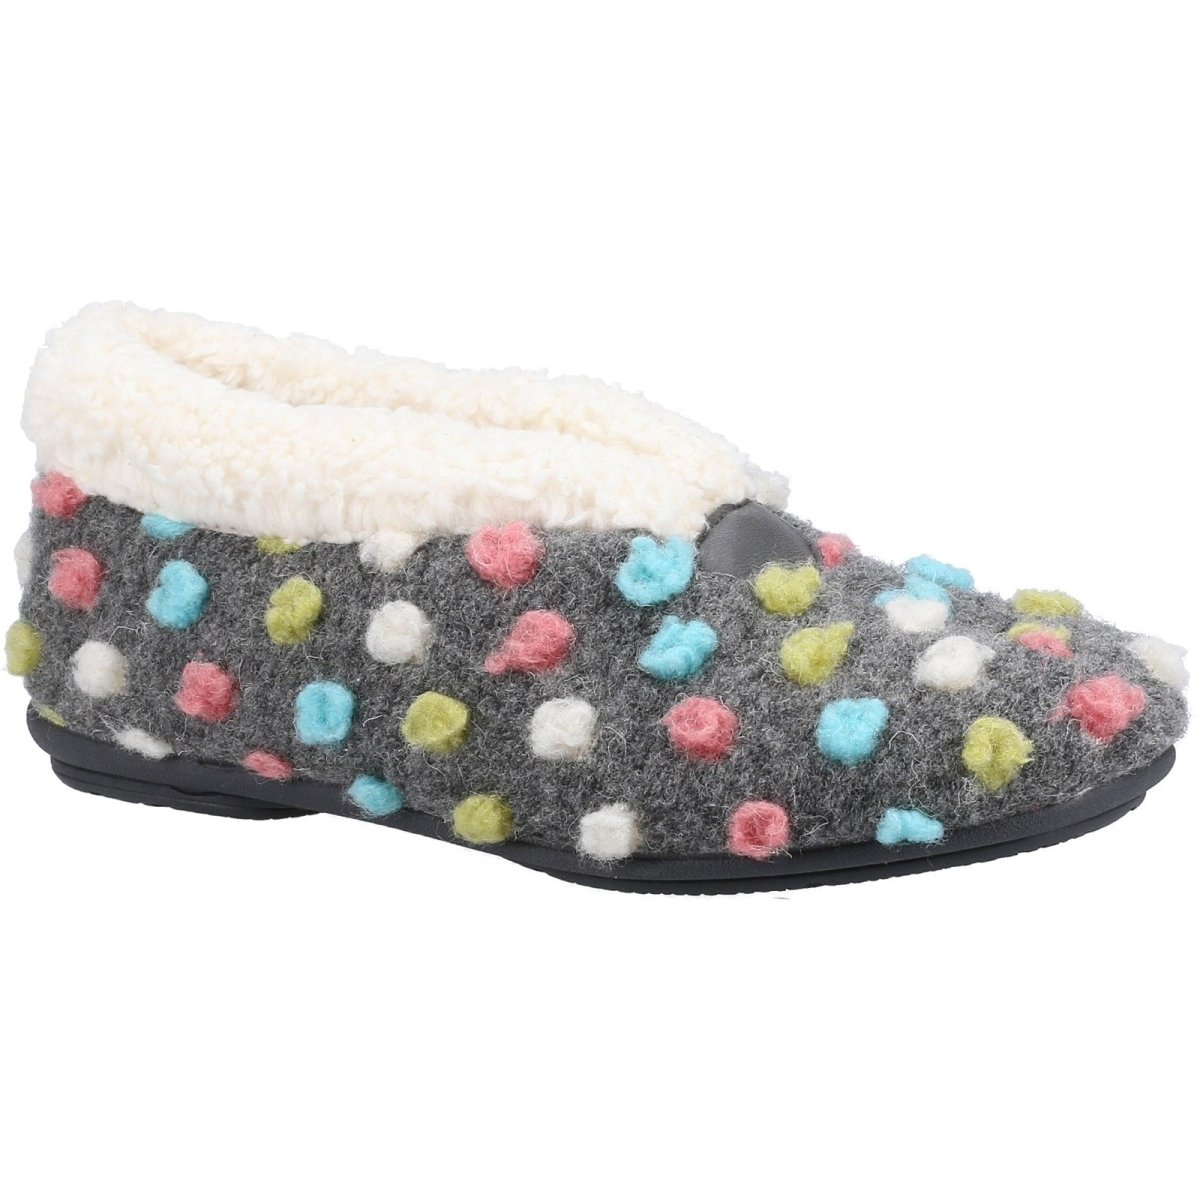 Fleet & Foster Snowberry Polka Dot Ladies Slippers - Shoe Store Direct